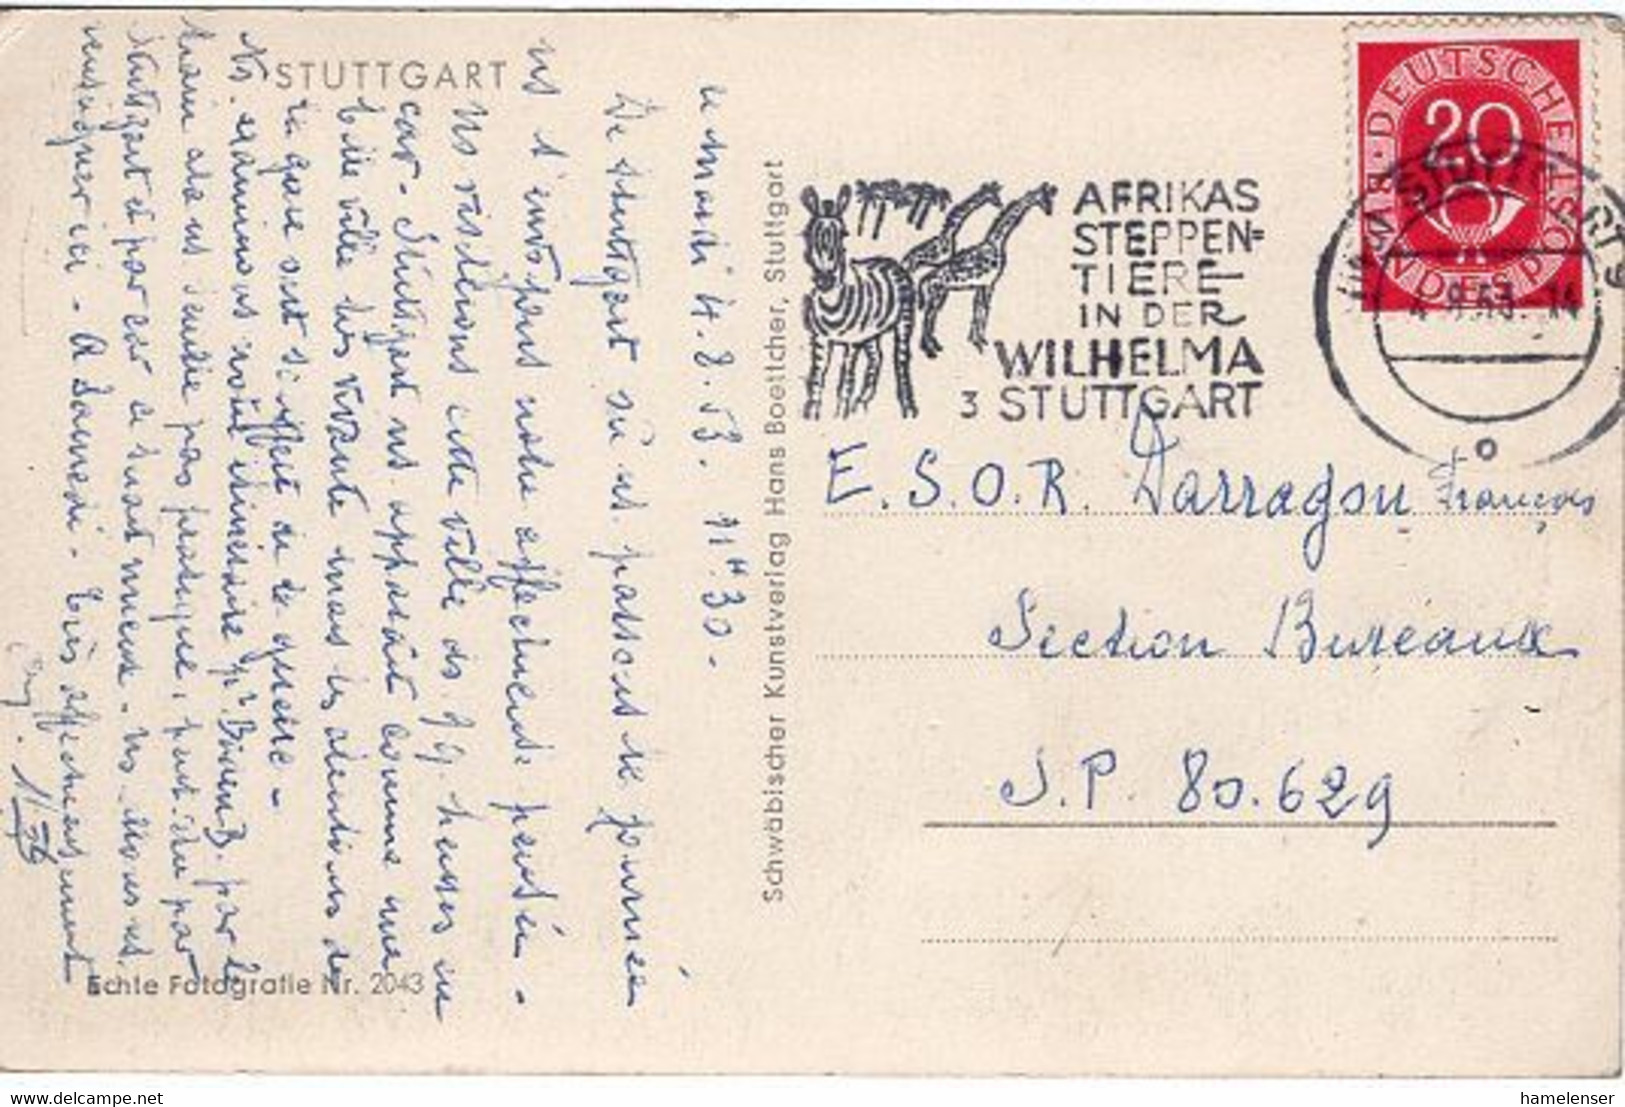 51708 - Bund - 1953 - 20Pfg Posthorn EF A AnsKte STUTTGART - AFRIKAS STEPPENTIERE -> S.P. 80.629 (Frankreich) - Giraffe